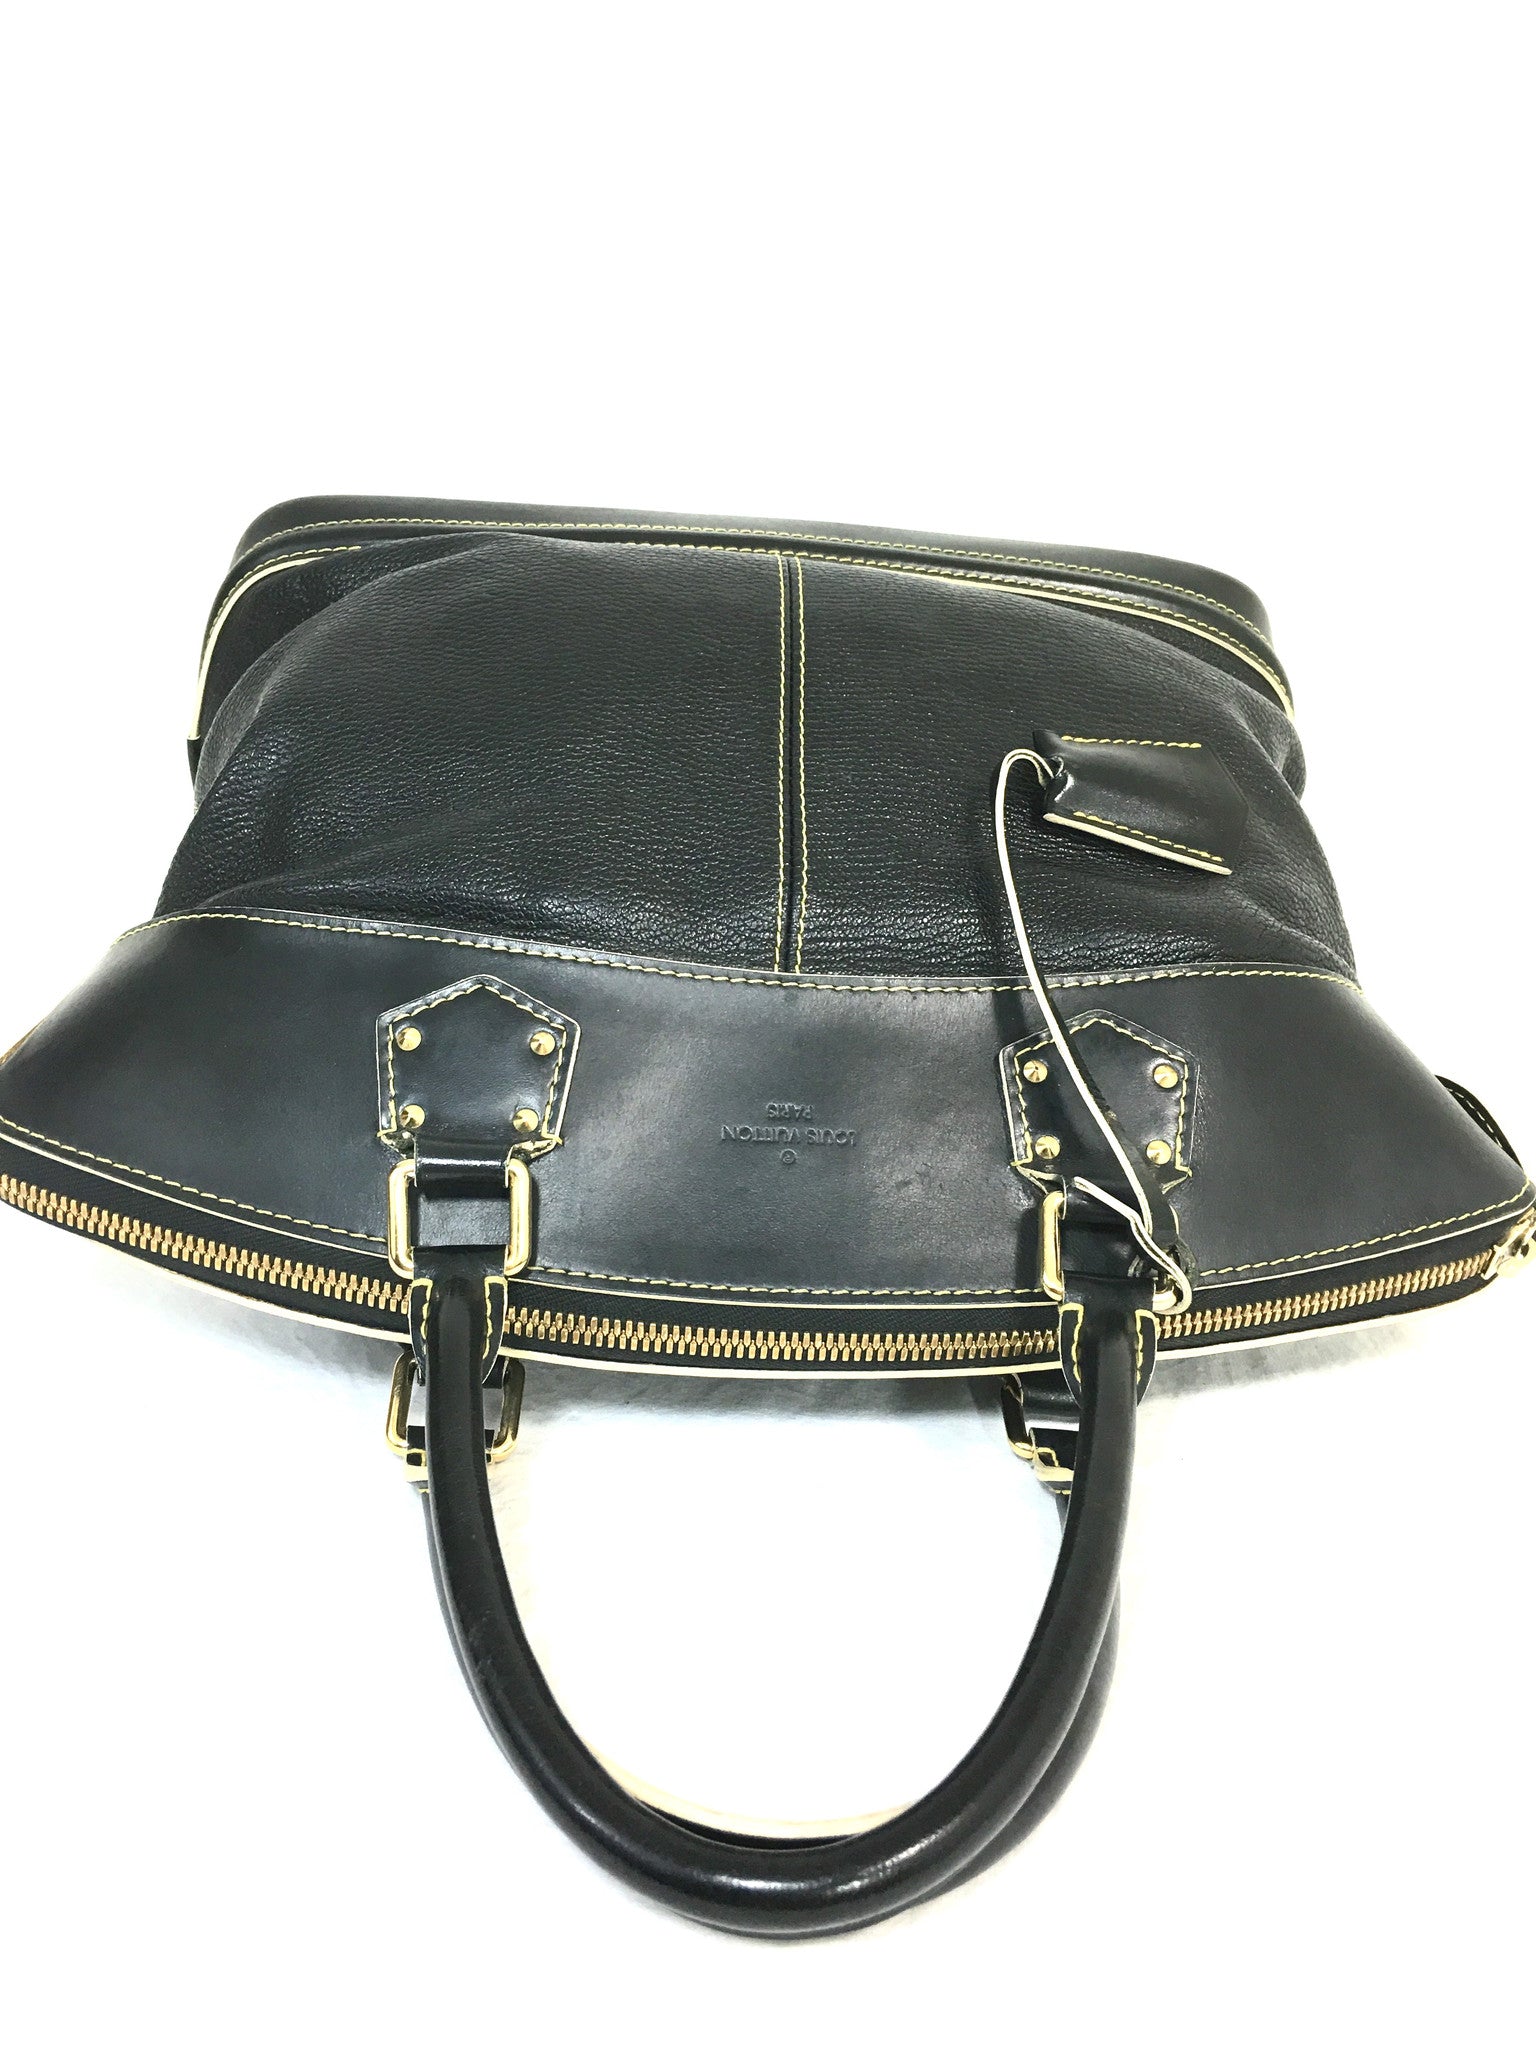 Louis Vuitton Black Suhali Leather Lockit GM Dome Bag 2lv1020